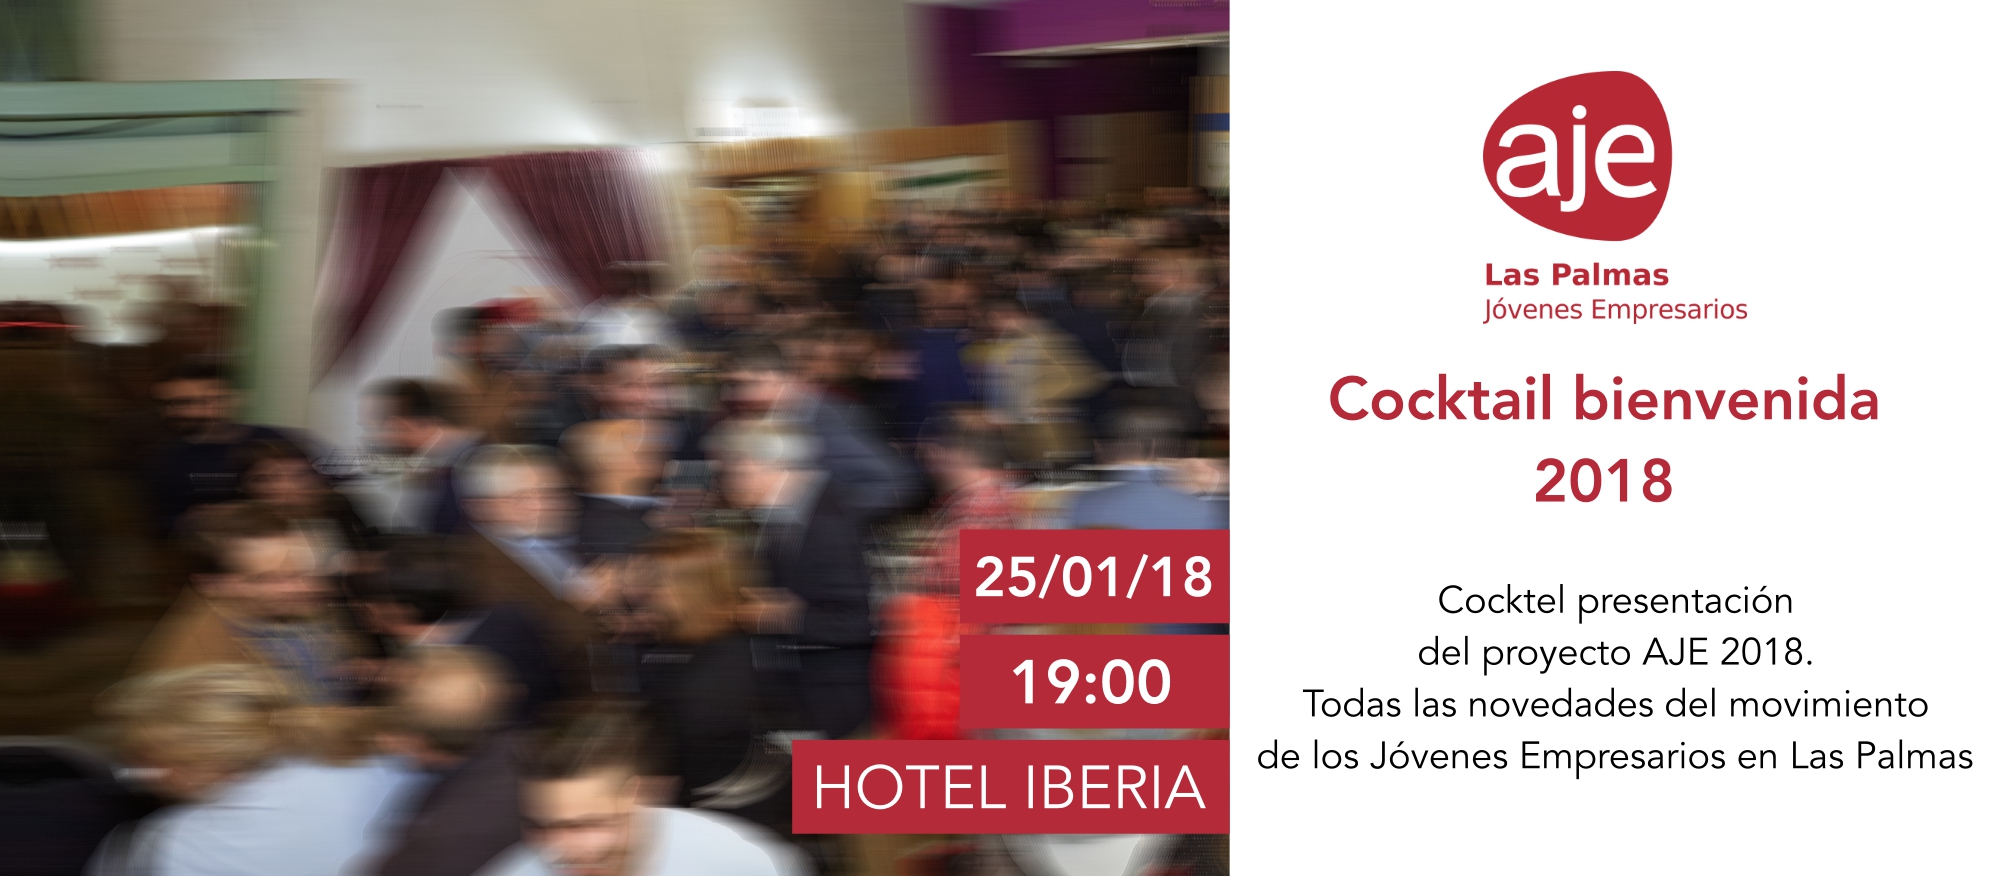 Cocktail bienvenida 2018 AJE Las Palmas